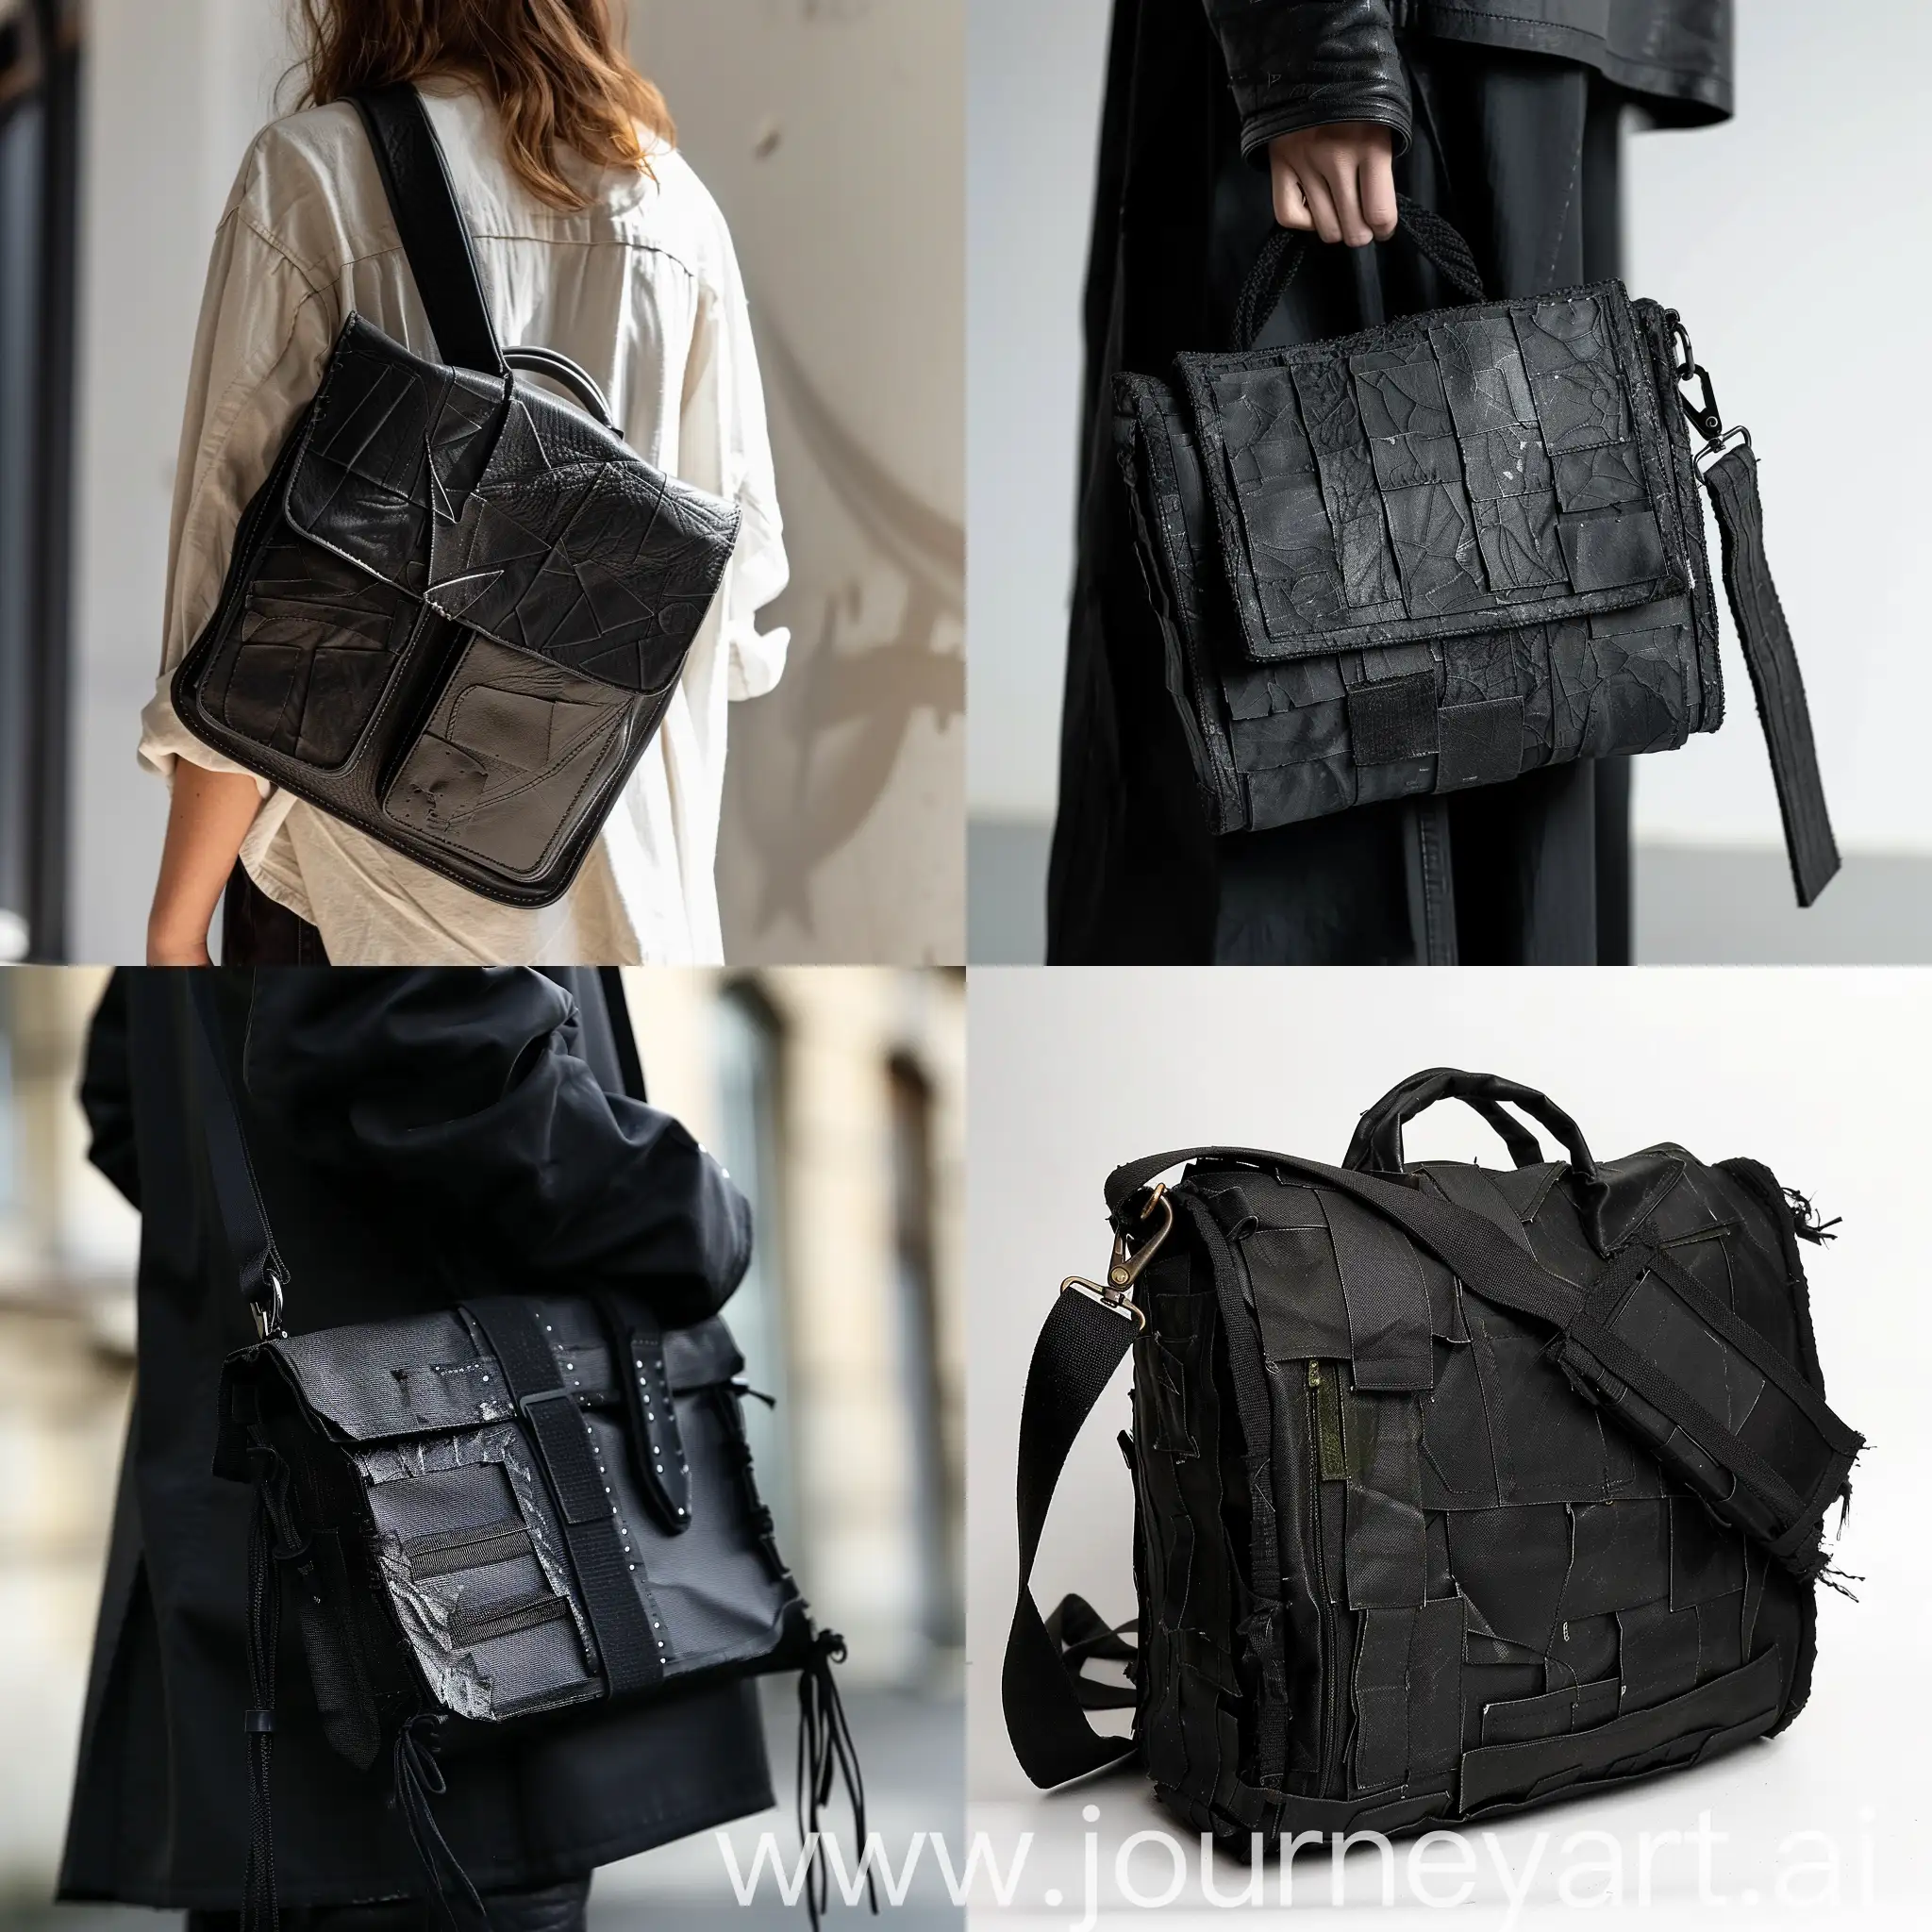 Elegant-Unisex-Shoulder-Bag-Inspired-by-Maison-Margiela-Vintage-High-Fashion-Accessory